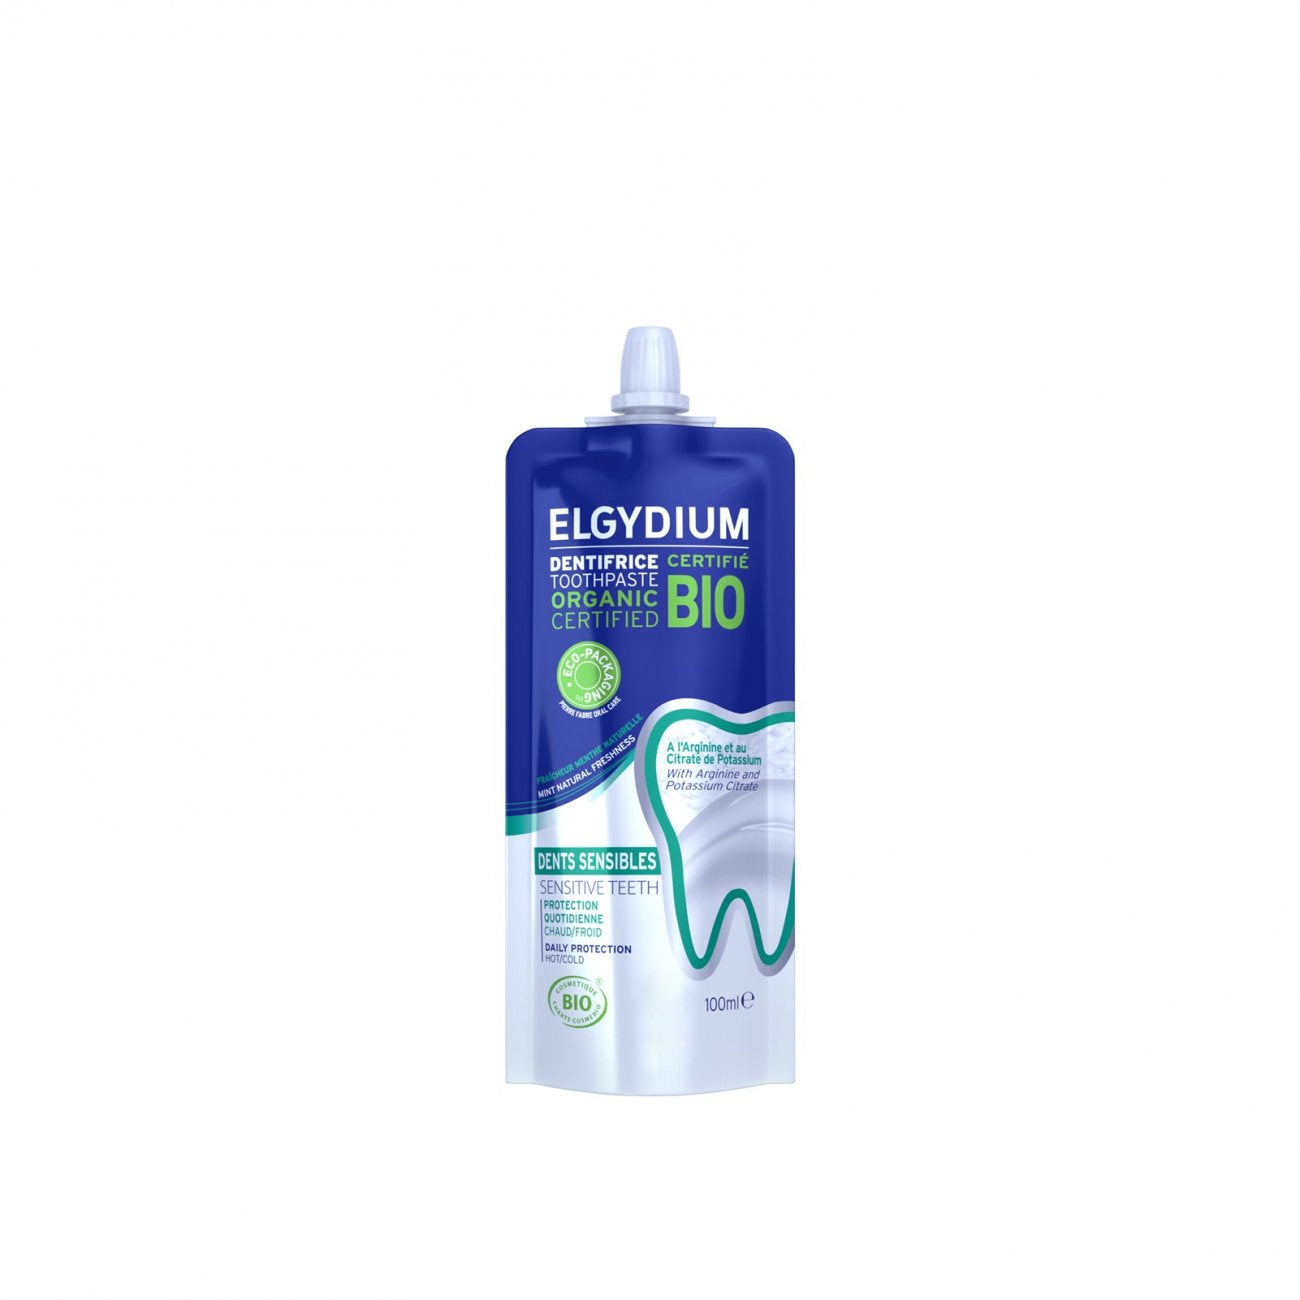 Bio Sensitive Teeth Toothpaste 100ml